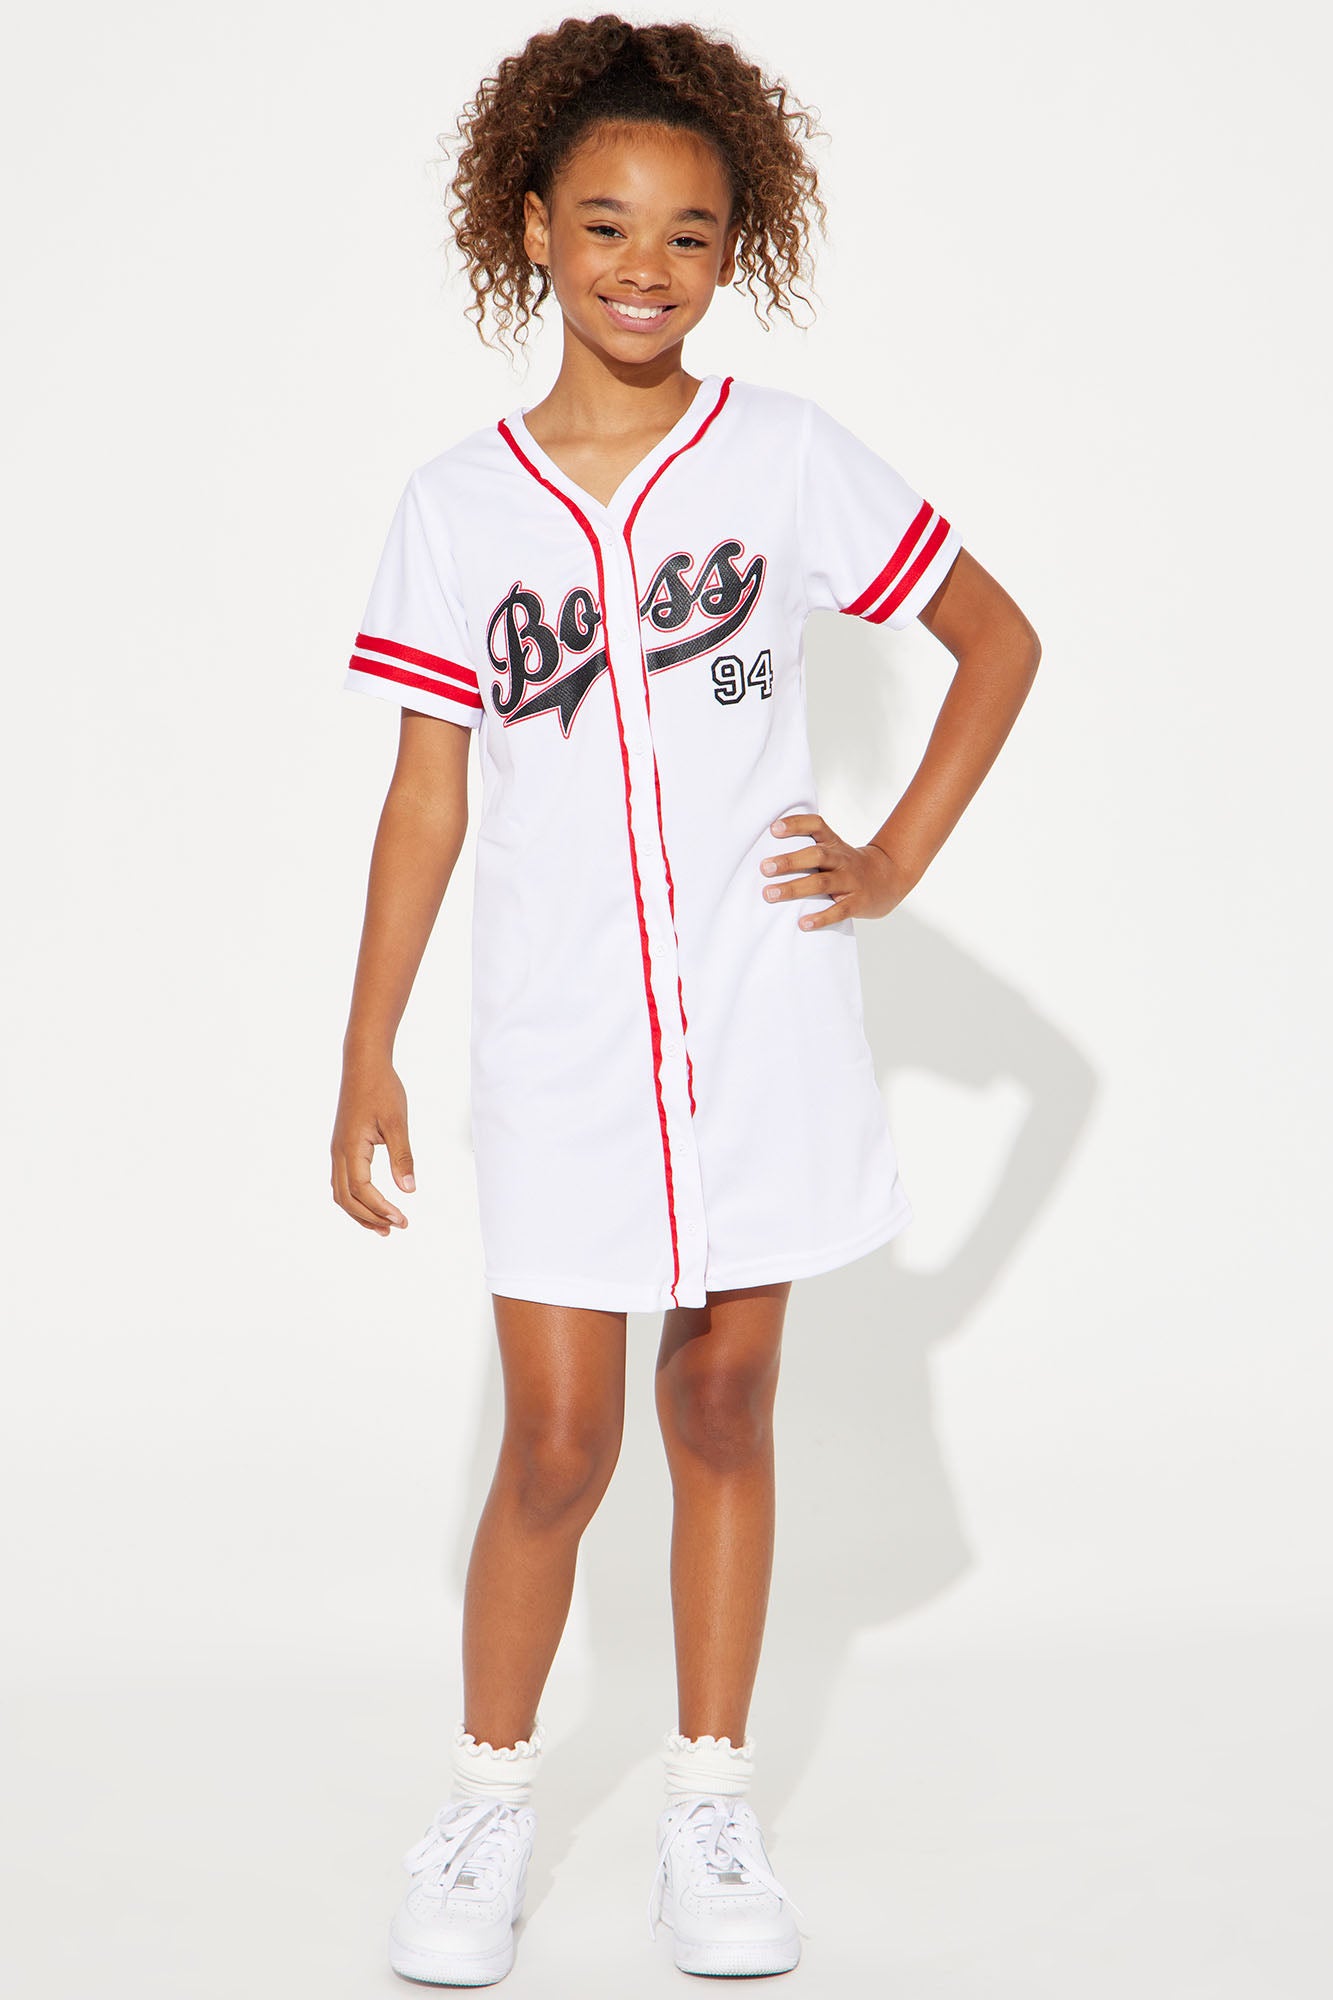 baseball jersey over dress